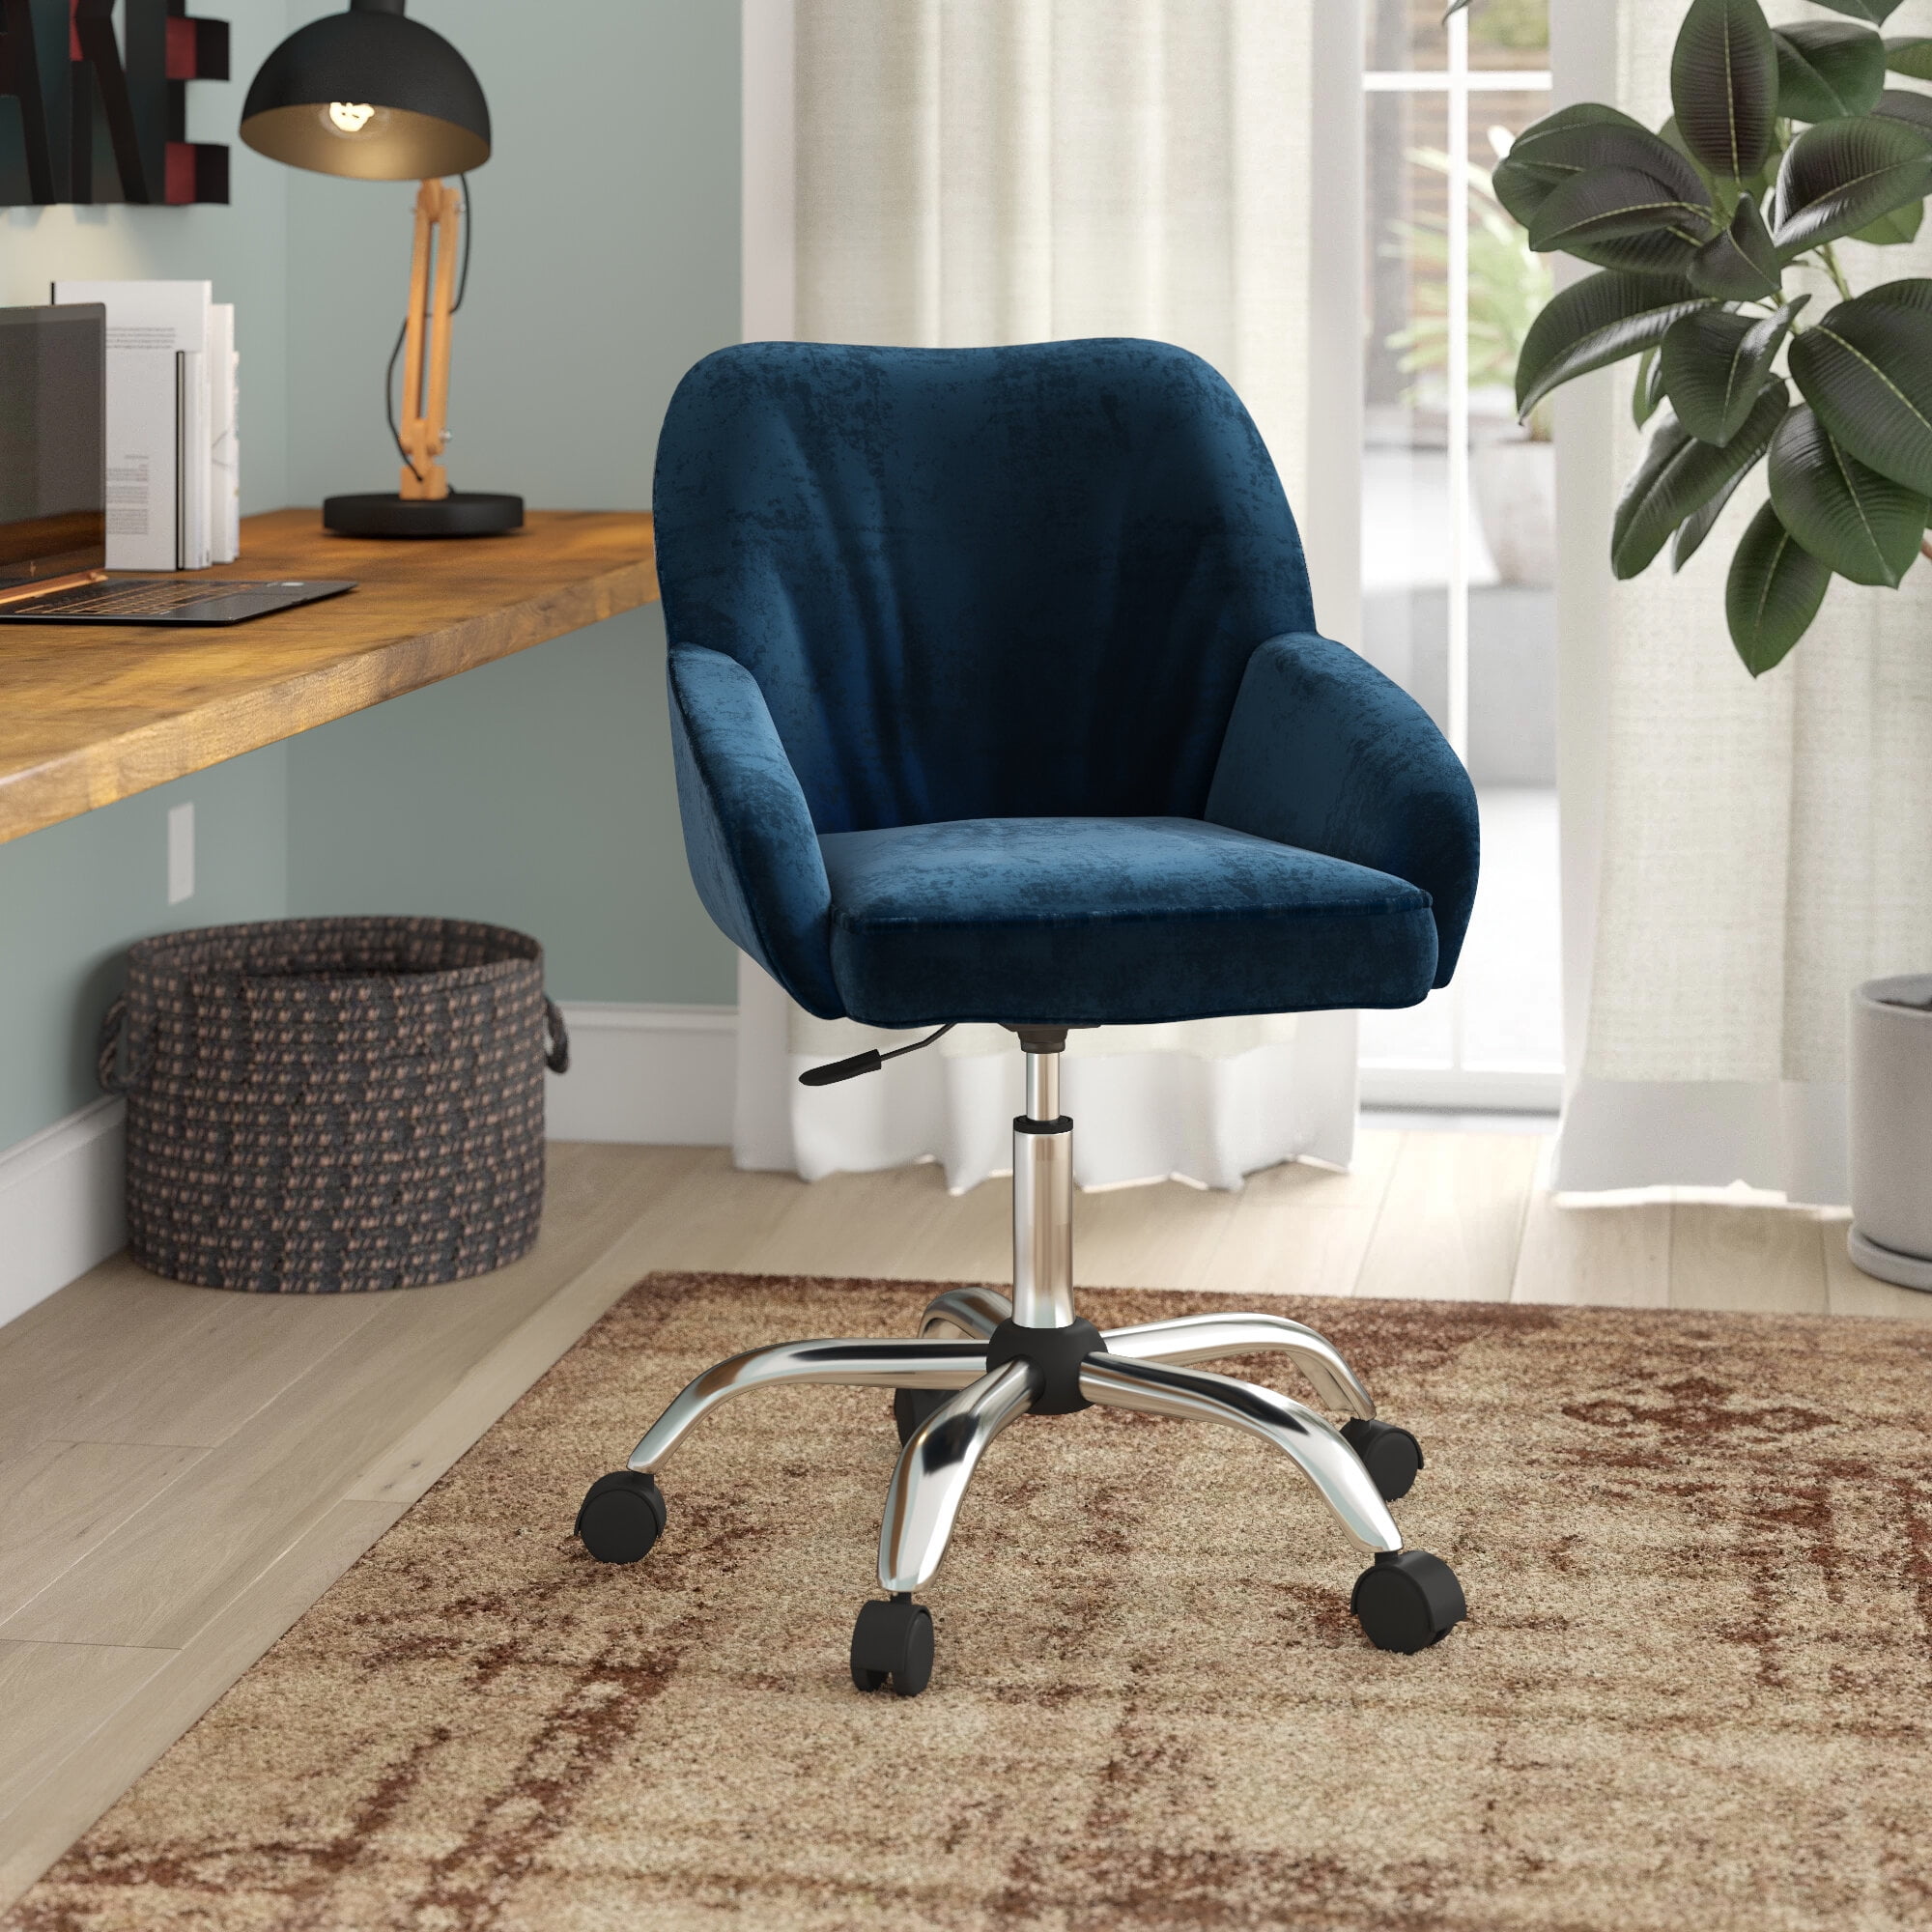 Office Chair Mid-Back Desk Task Velvet Seat Backrest Support With Wheels Blue US 